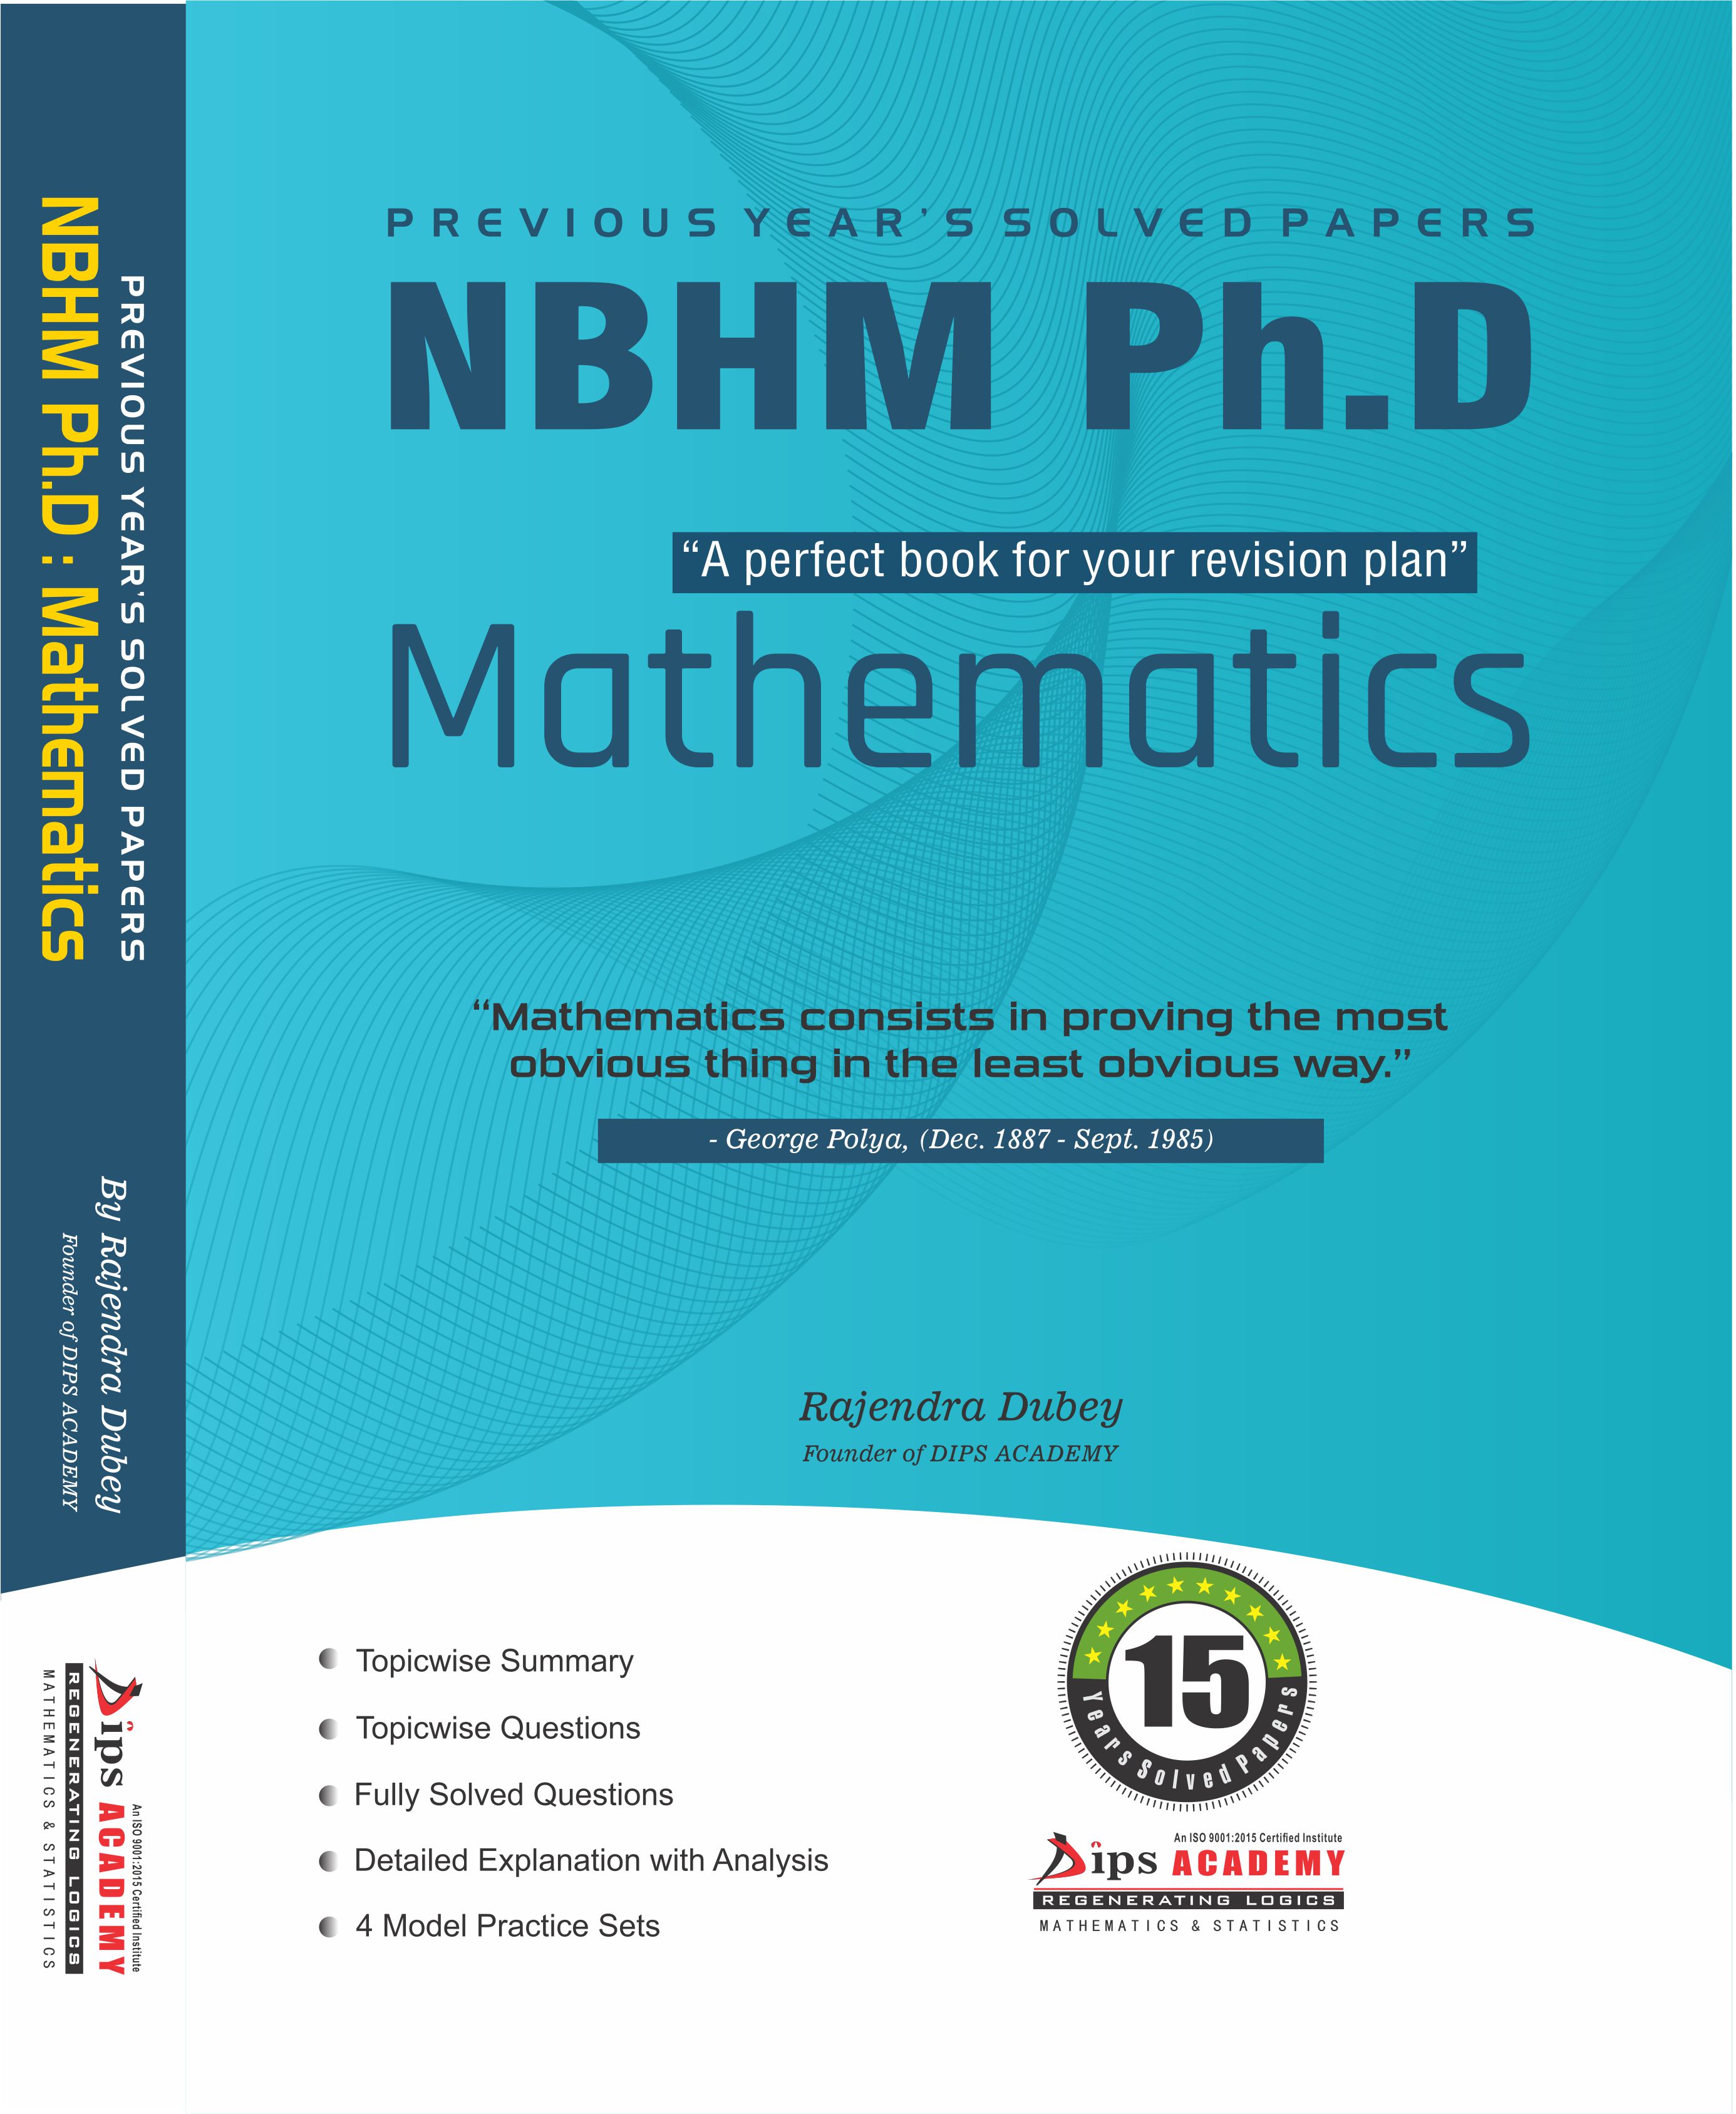 NBHM PhD Mathematics